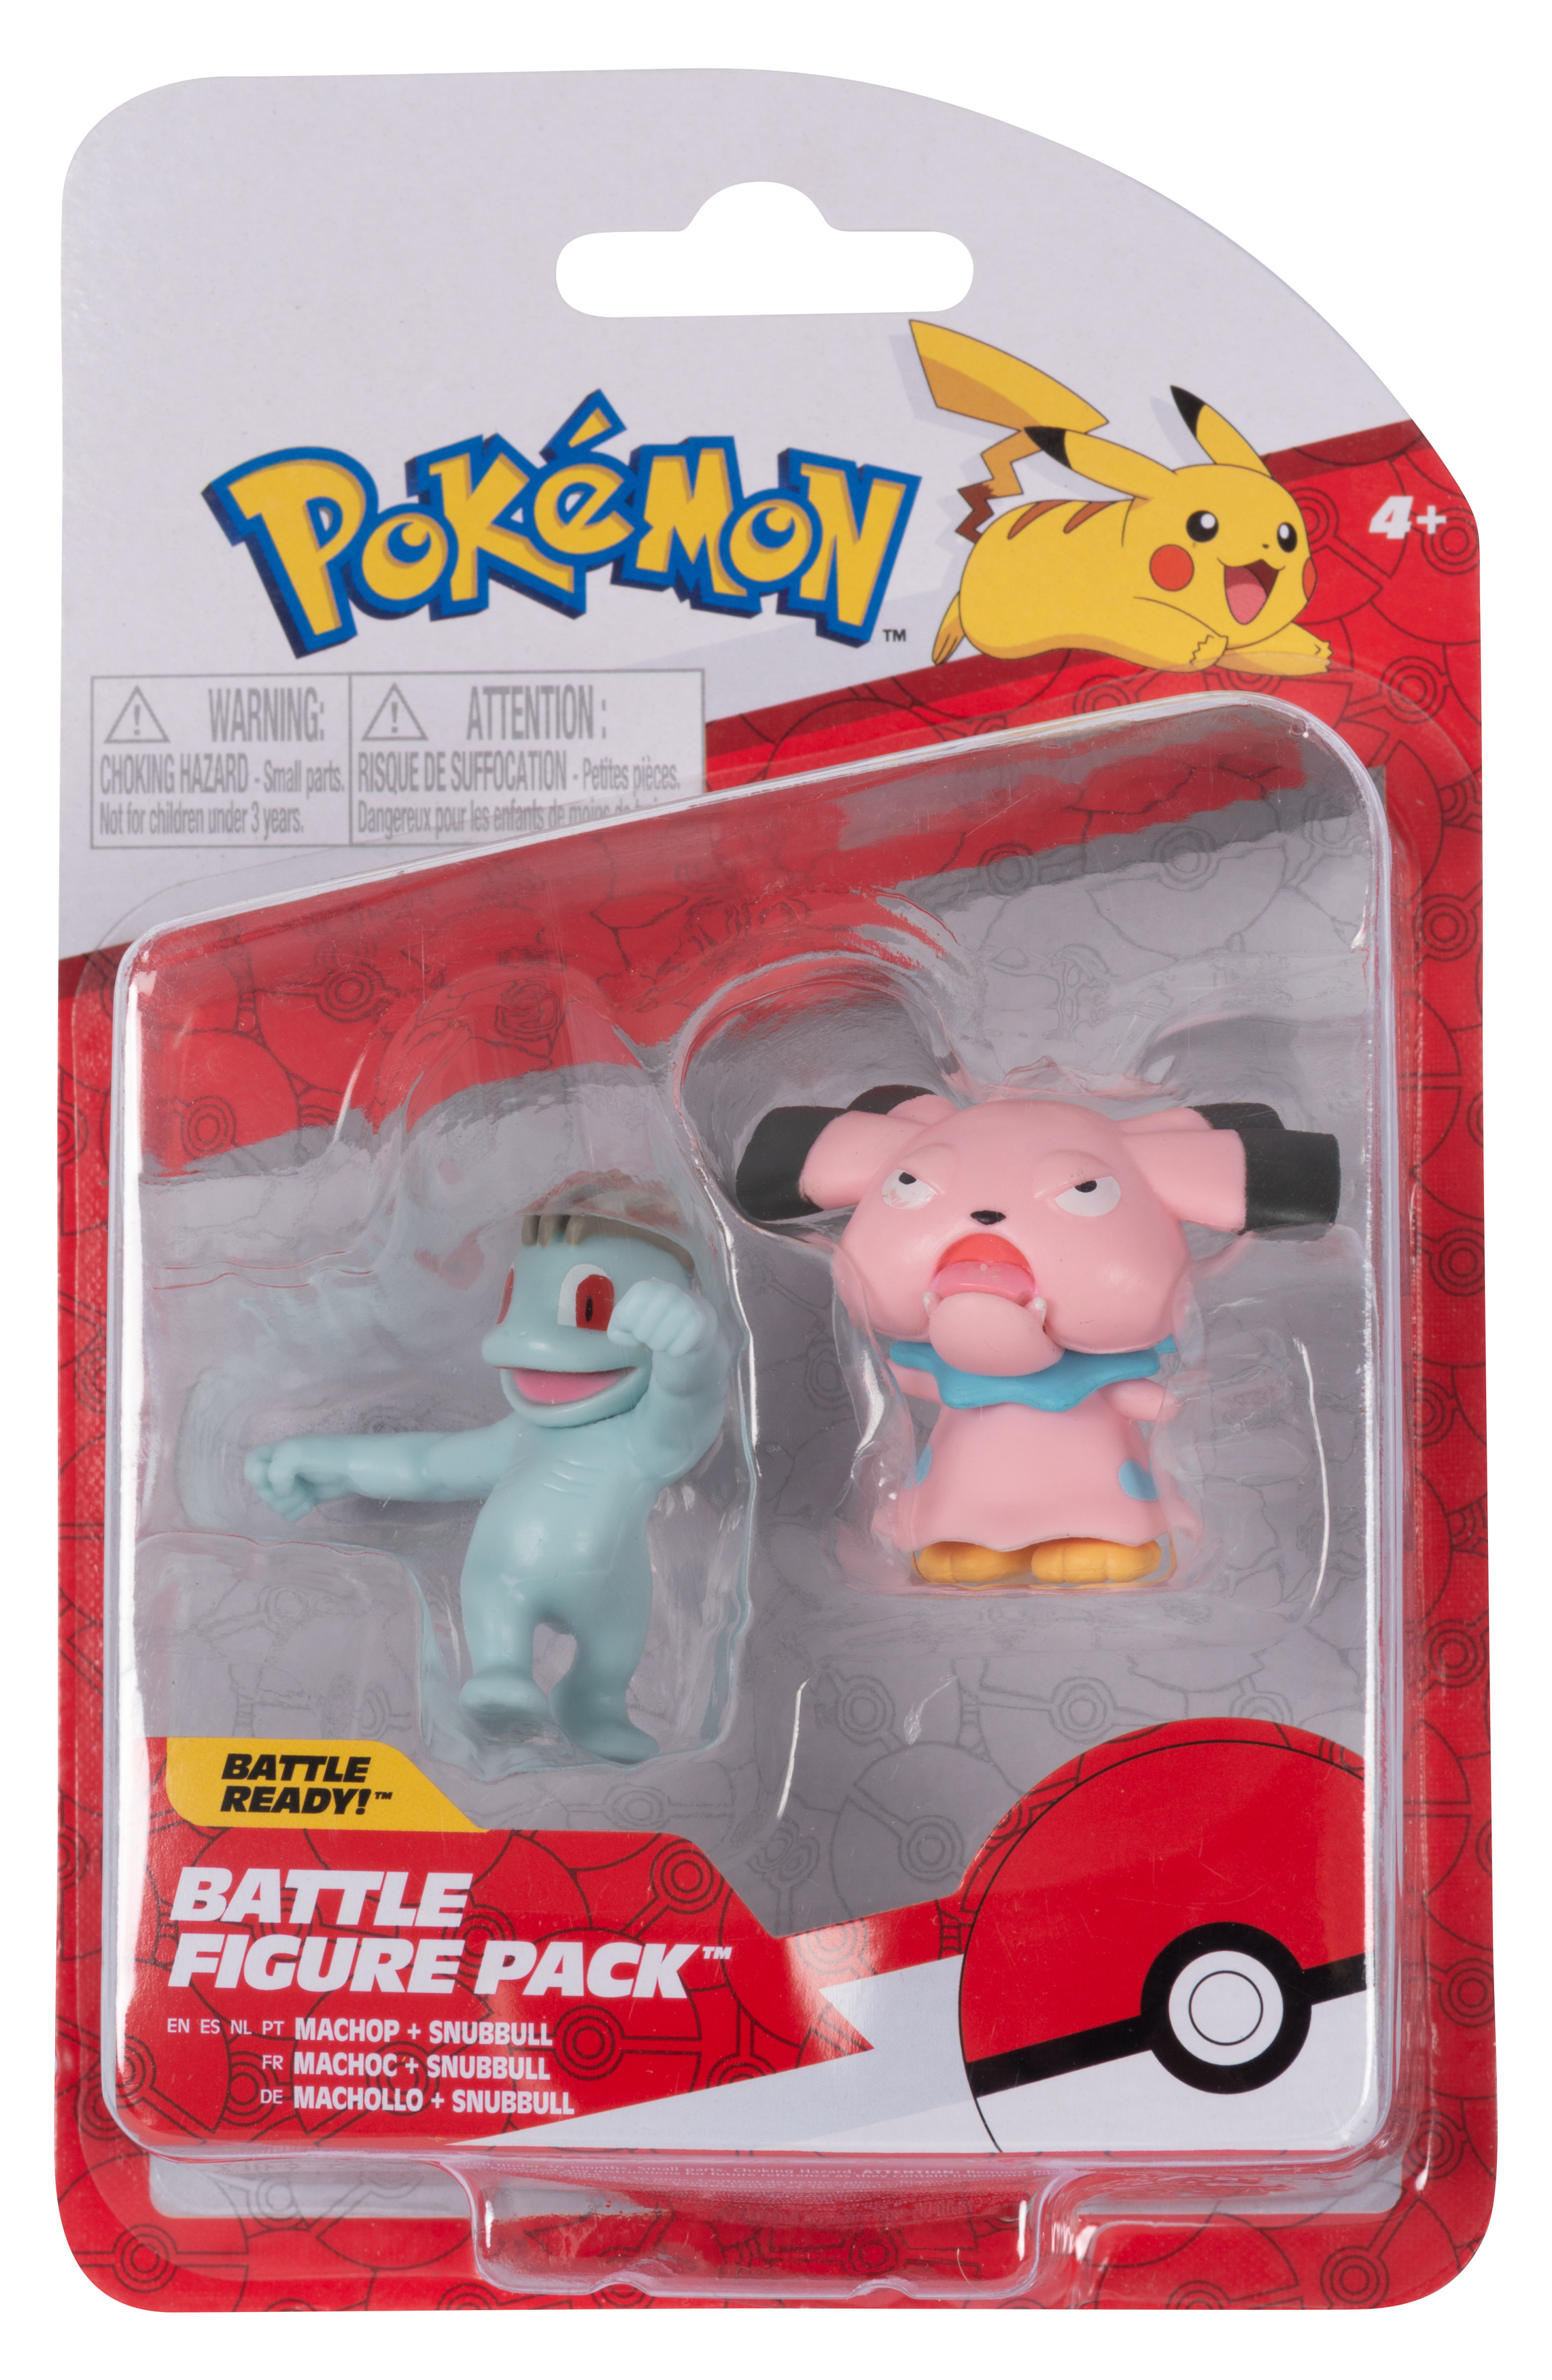 Pokémon - Battle Figure Pack - Machollo & Snubbull